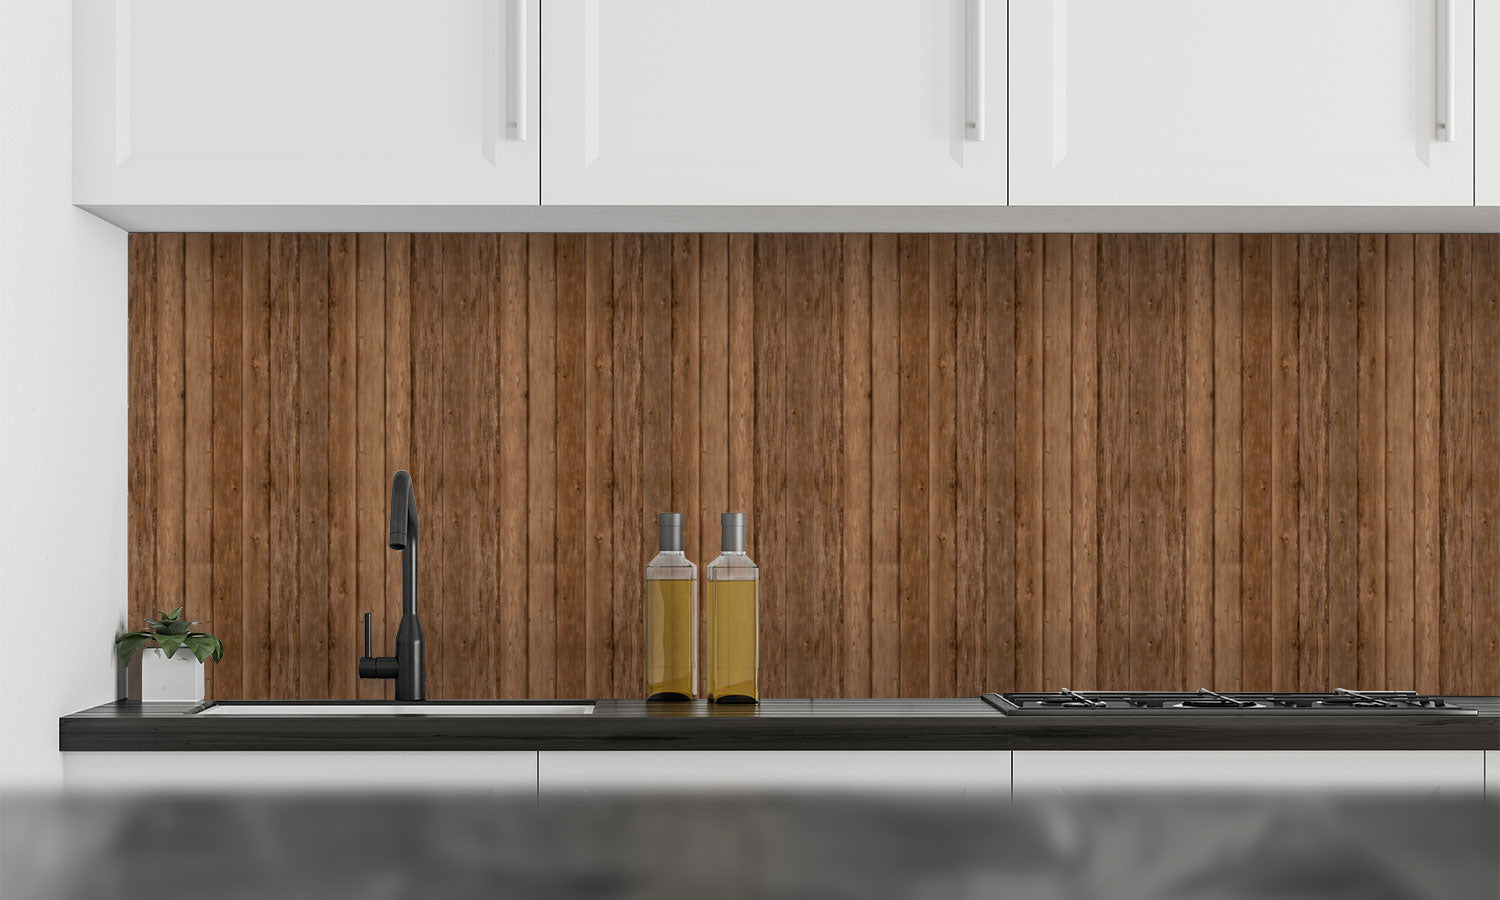 Paneli za kuhinje Old parquet -  Stakleni / PVC ploče / Pleksiglas -  sa printom za kuhinju, Zidne obloge PKU112